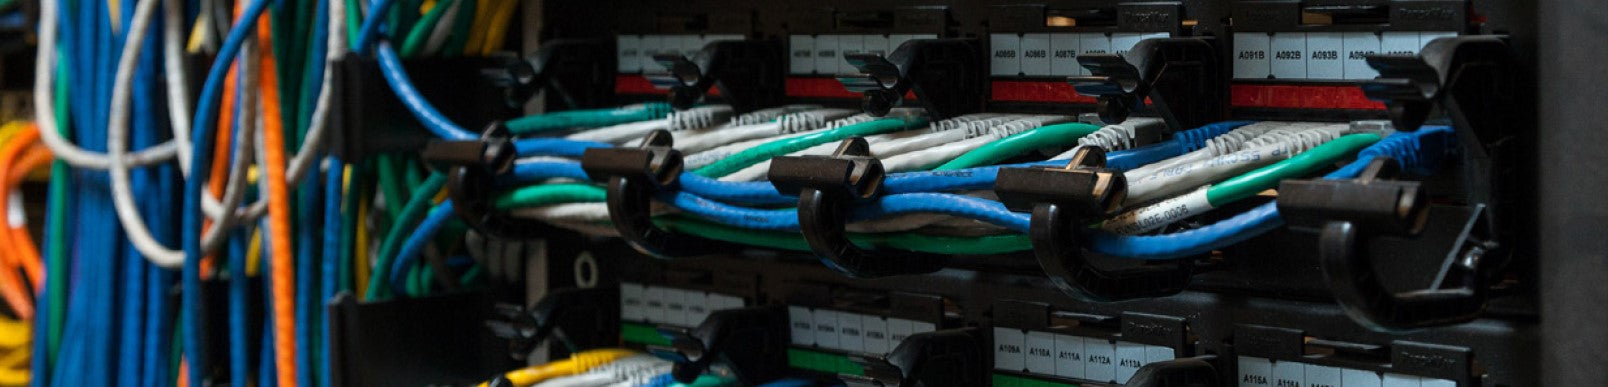 Data Centre cables